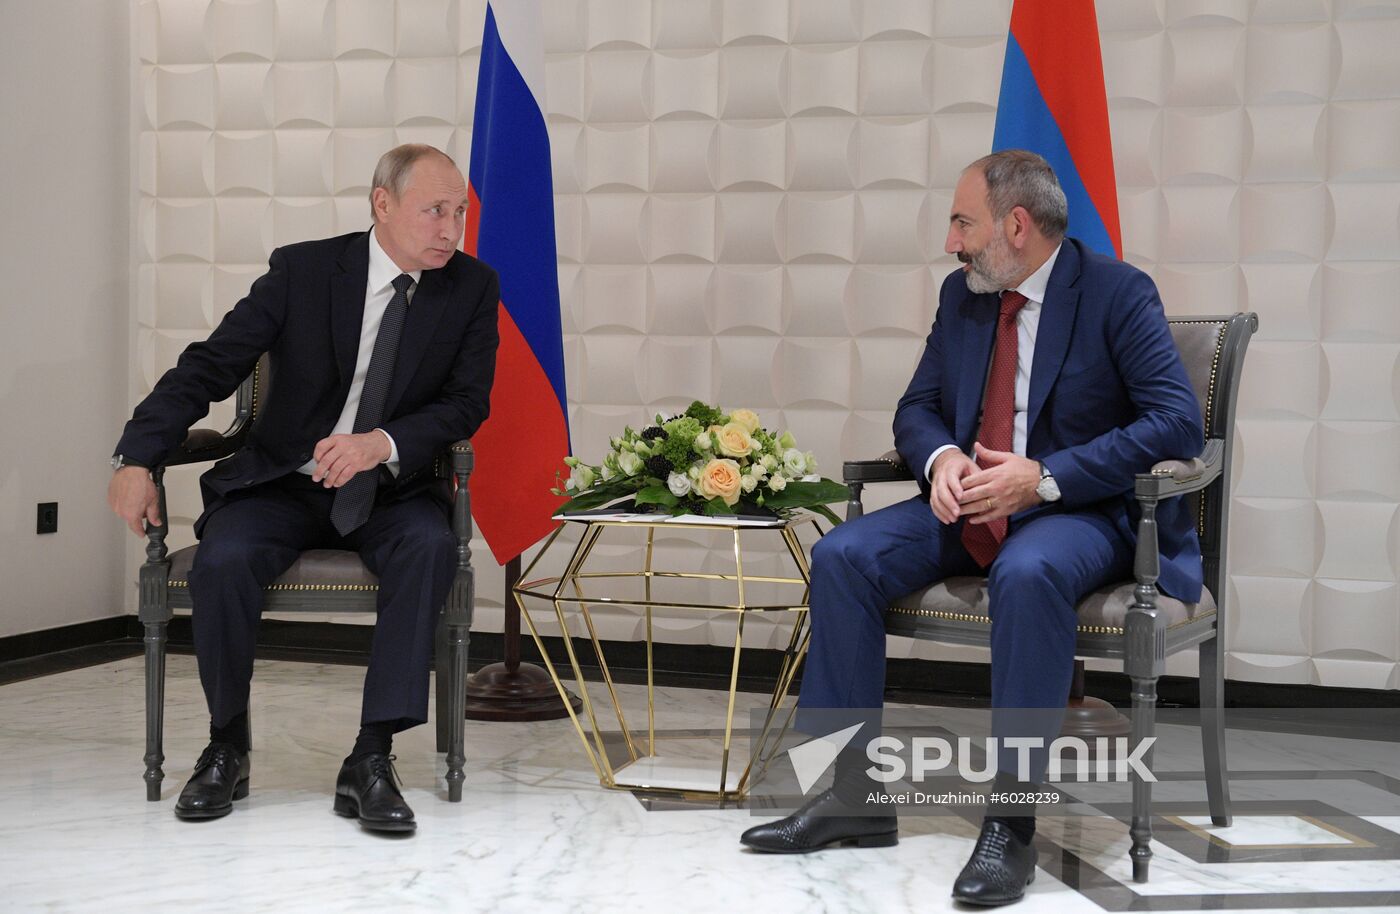 Armenia Eurasian Partnership Forum